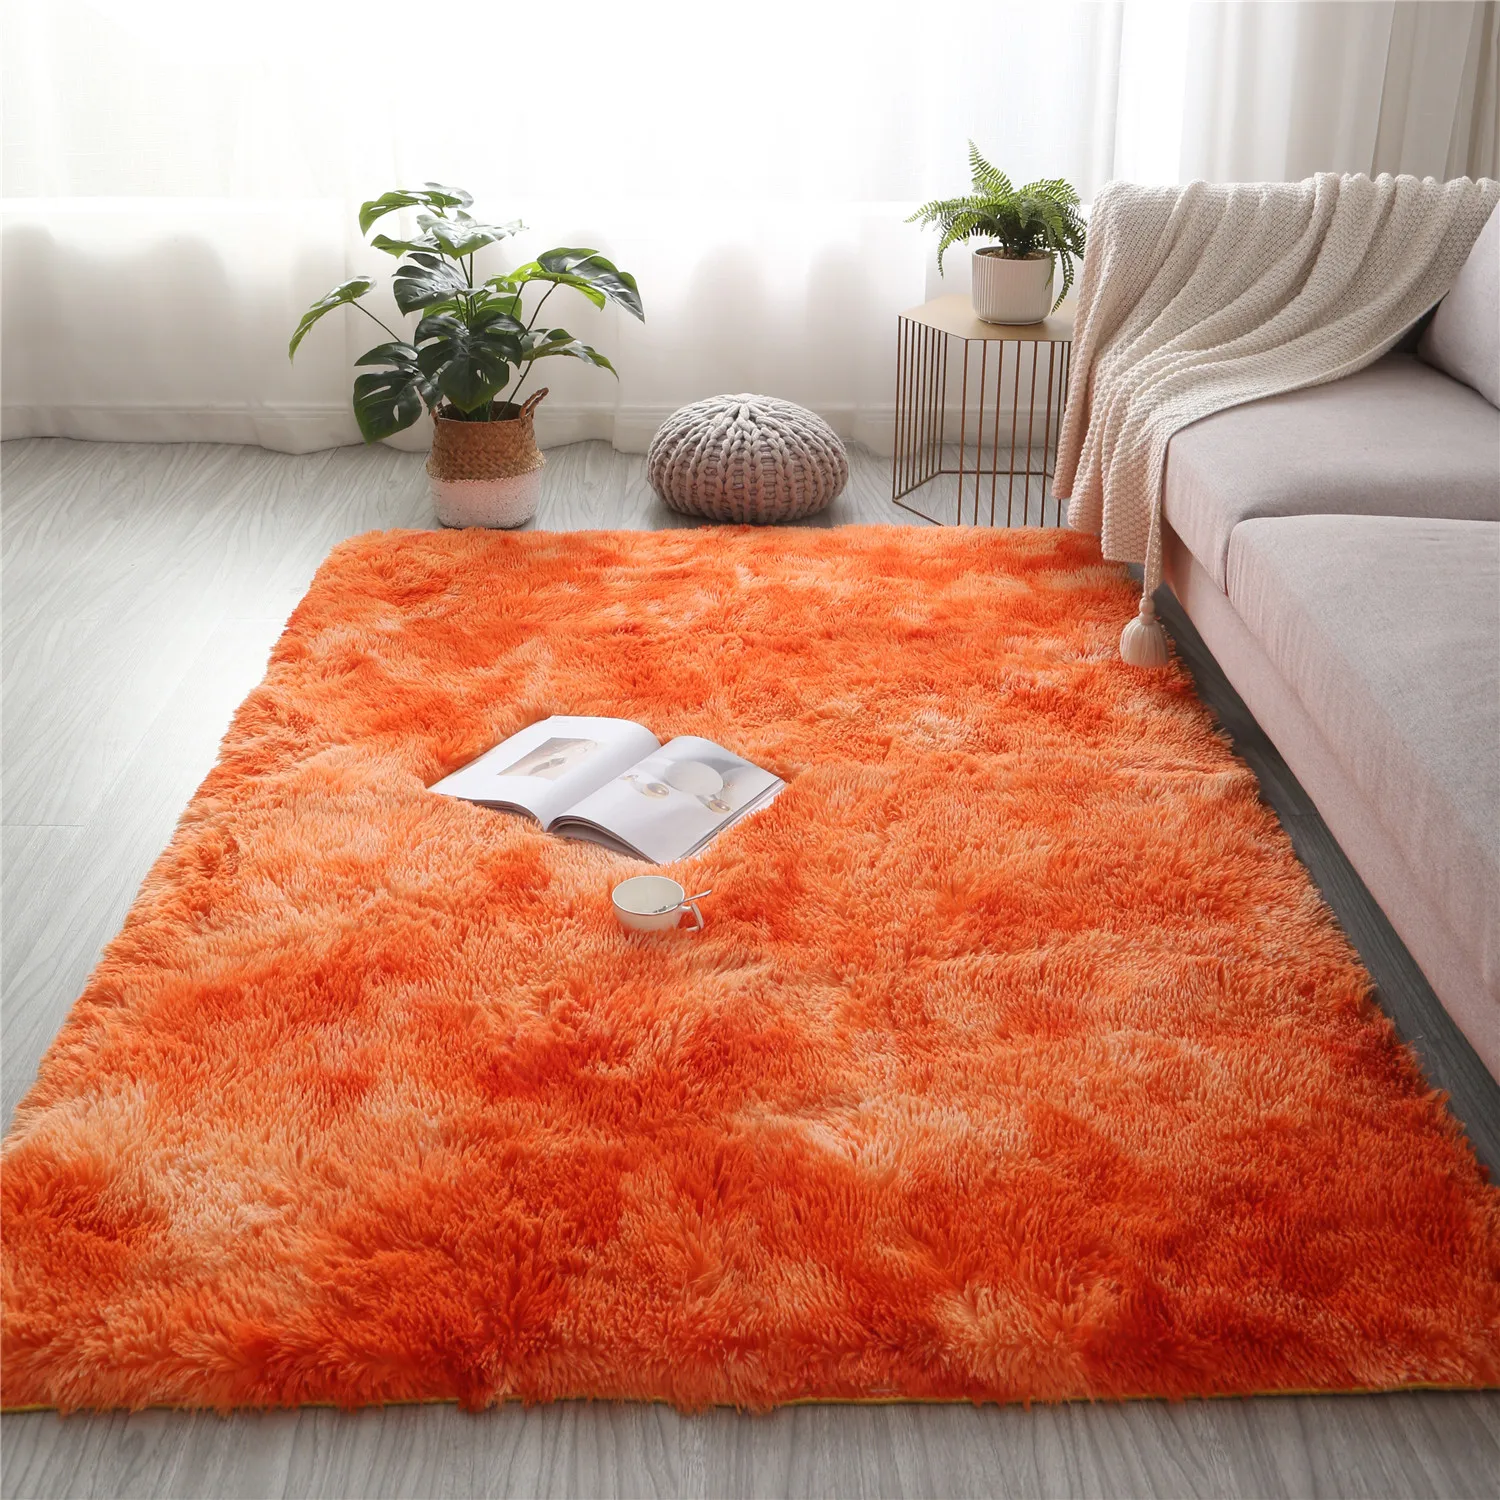 

Ultra Soft Fluffy Area Rugs Soft Plush Furry Rug Non-Skid Fleece Carpets for Bedroom Home Décor Carpet Living Room Floor Carpet